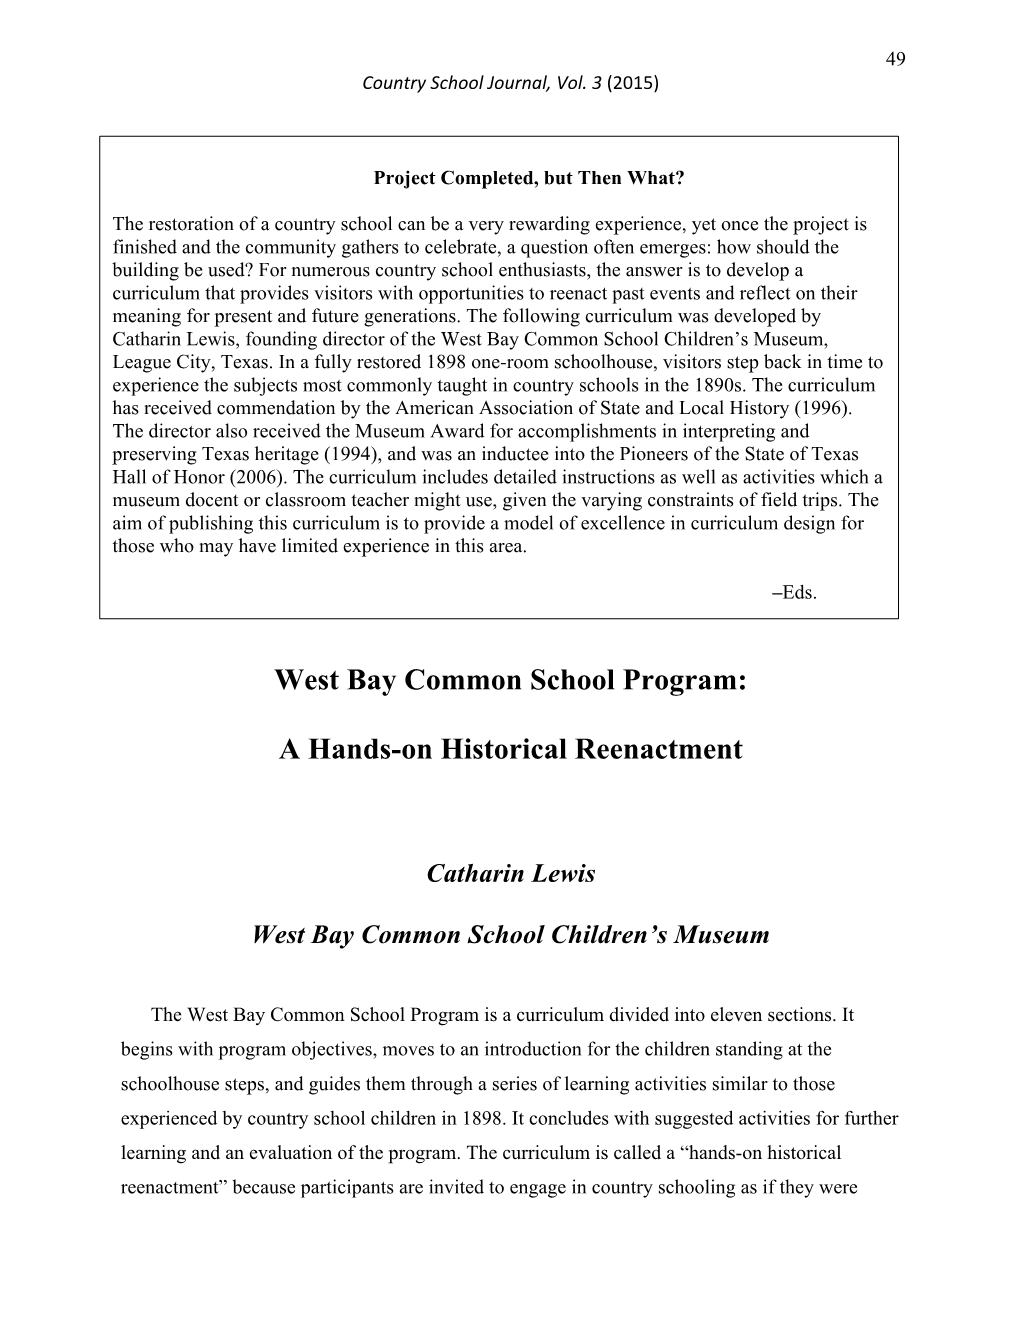 West Bay Common School Program: a Hands-On Historical Reenactment